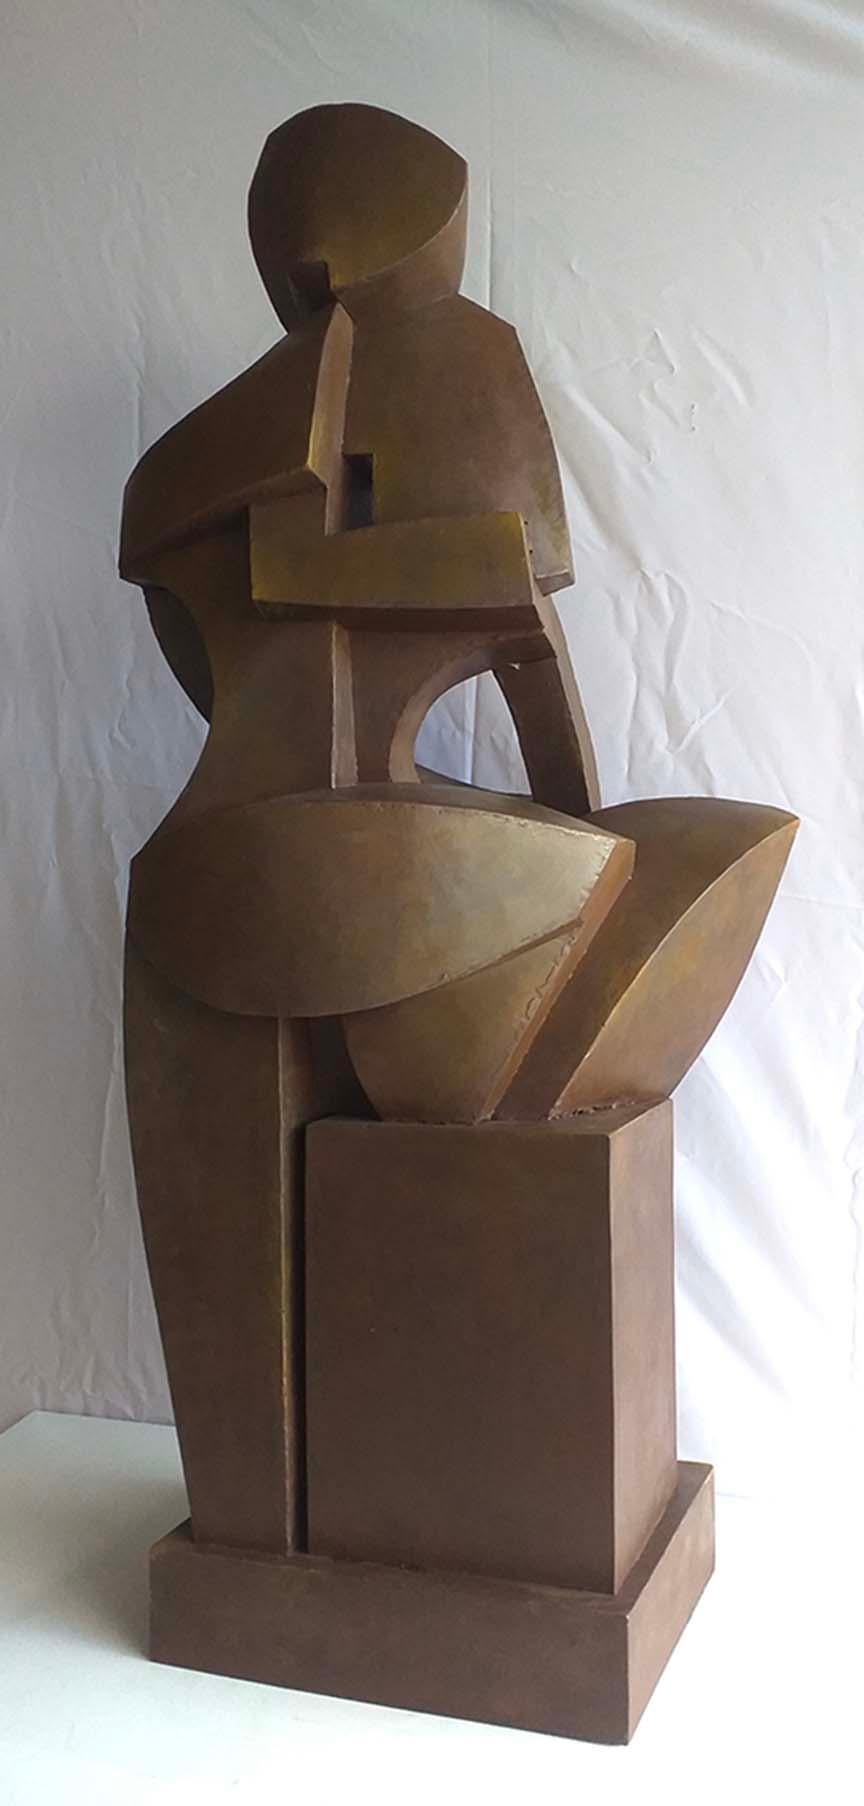 Amantes - Sculpture by Ulises Jimenez Obregon